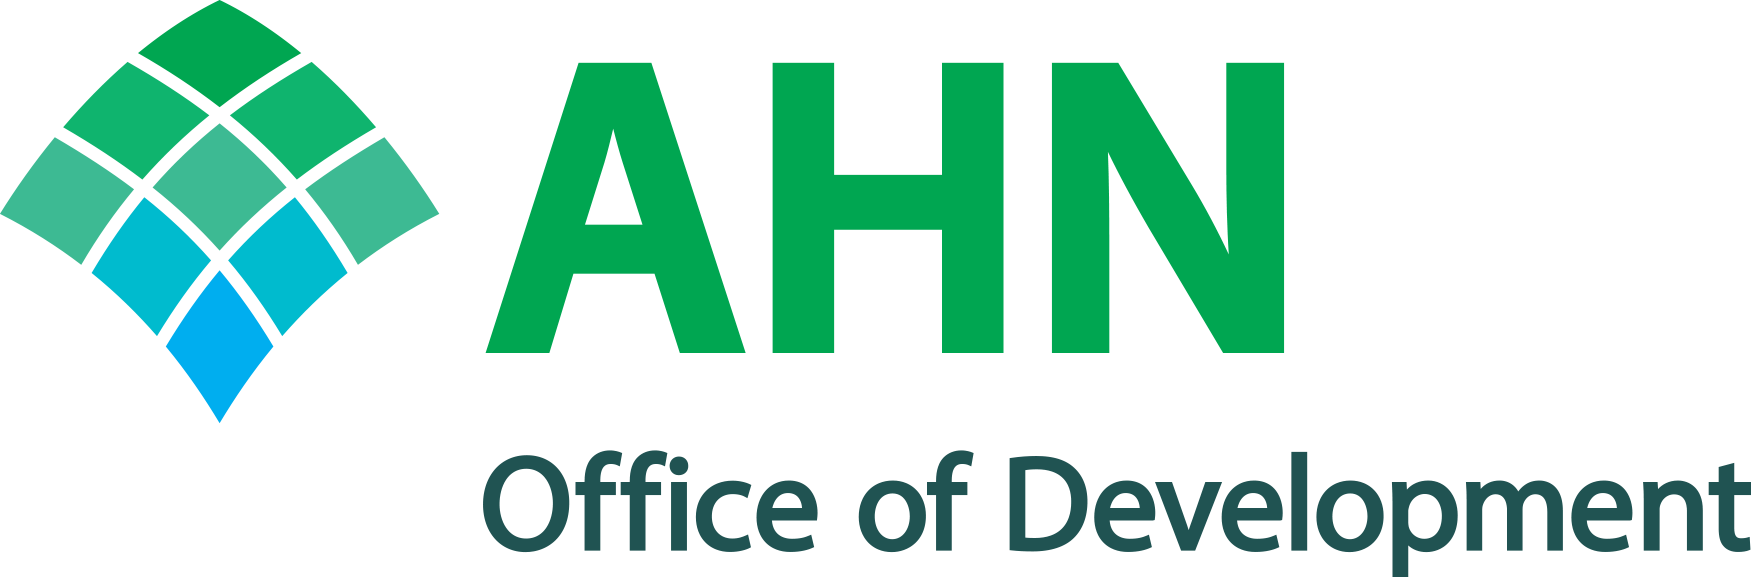 AHN Office of Development Logo